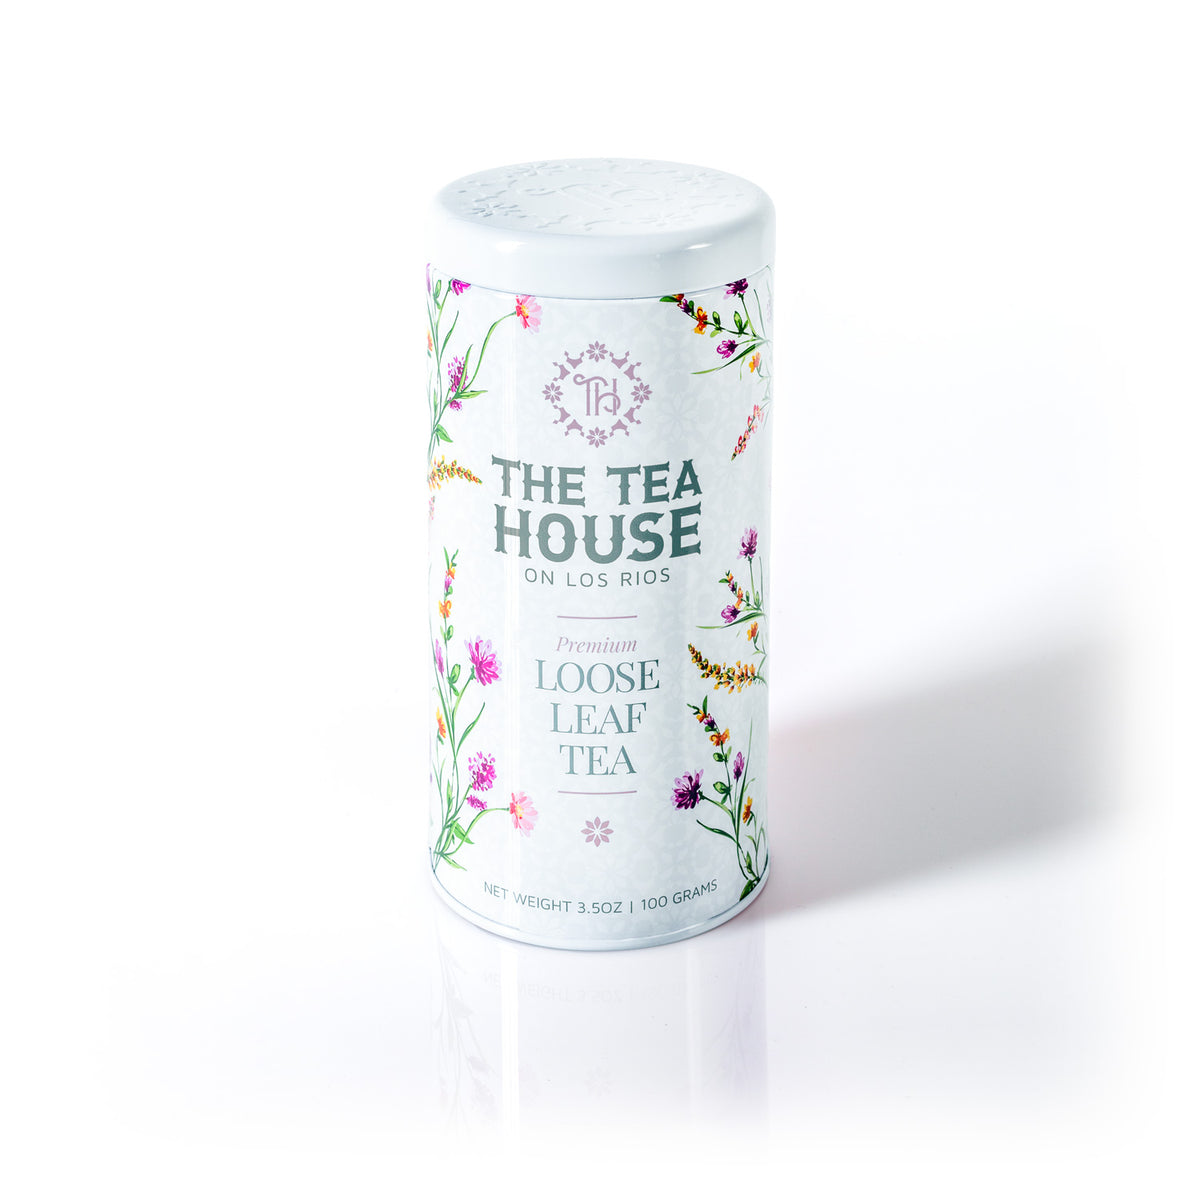 Explore The Tea House on Los Rios with this 100g Loose Leaf Tea Tin